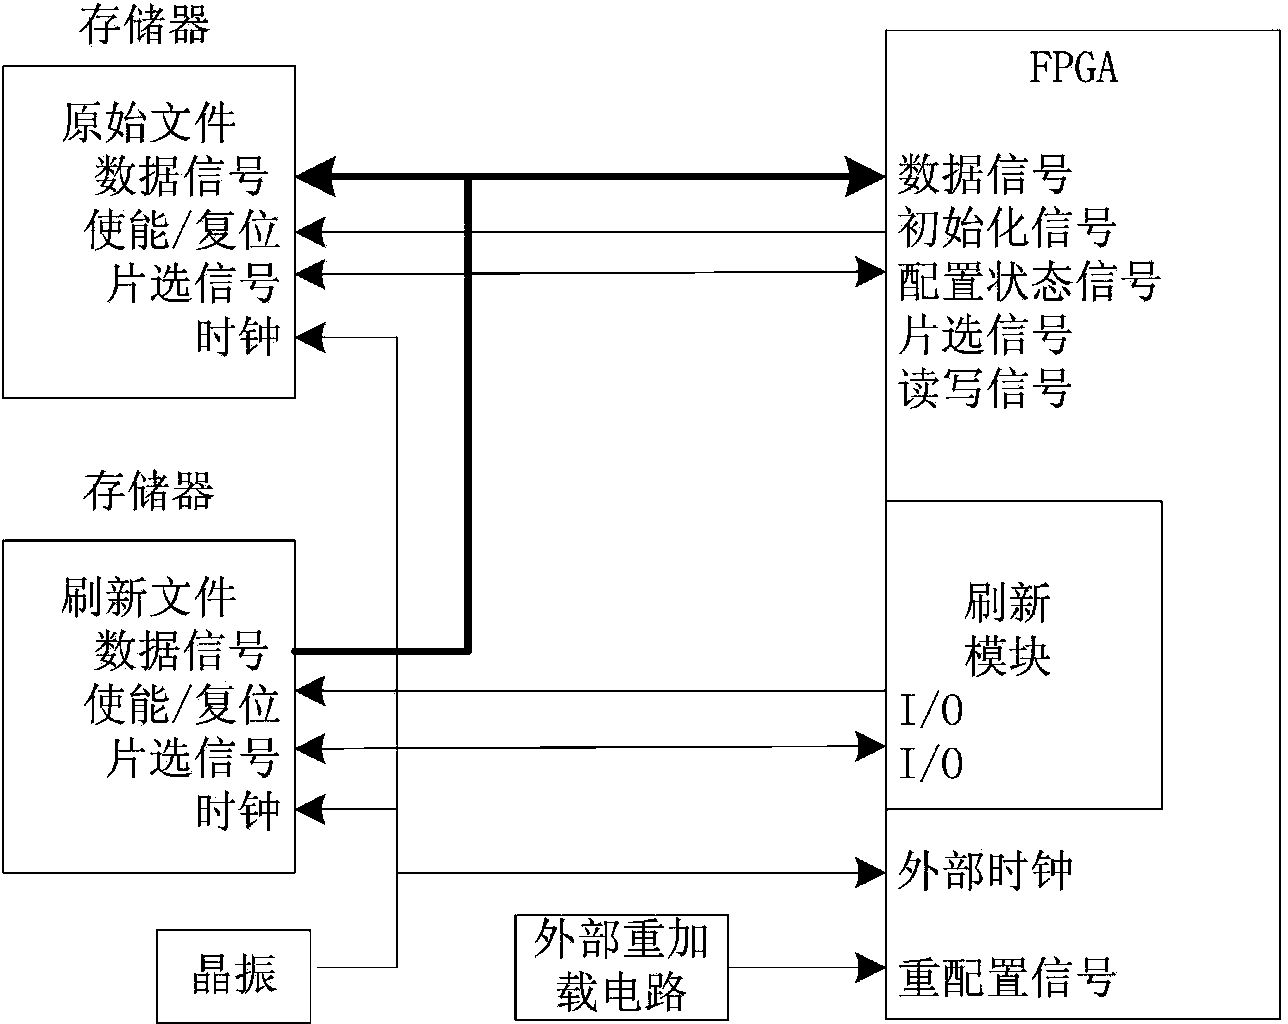 Single event upset resistant SRAM (Static Random Access Memory) type FPGA (Field Programmable Gate Array) refresh circuit and refresh method